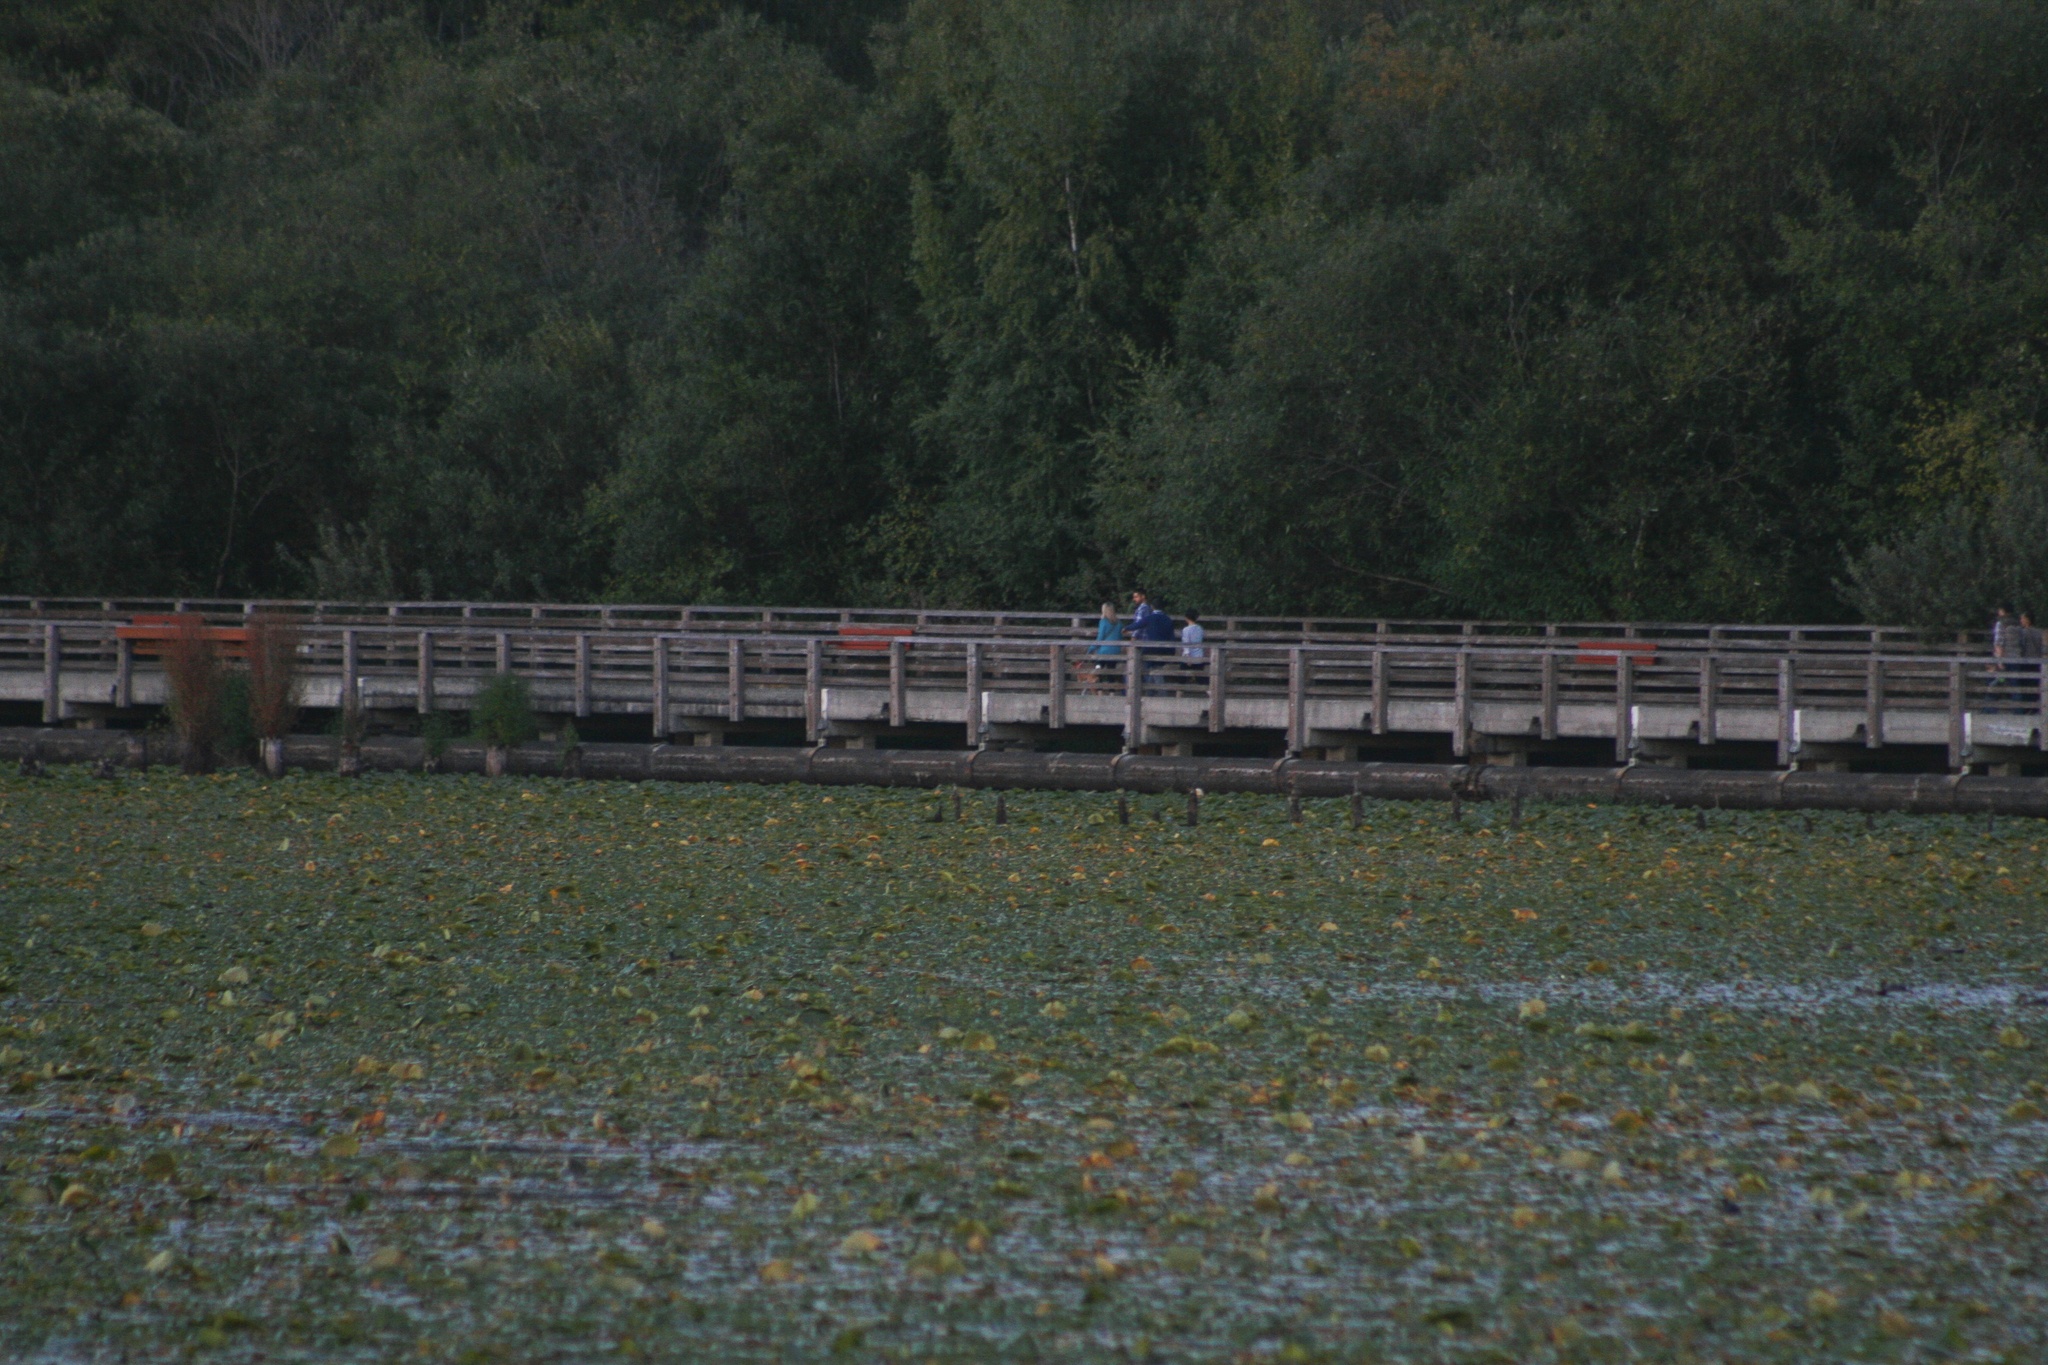 Walkers cross the edge of Juanita Bay on the old bridge near Juanita Bay Park. A regular volunteer event